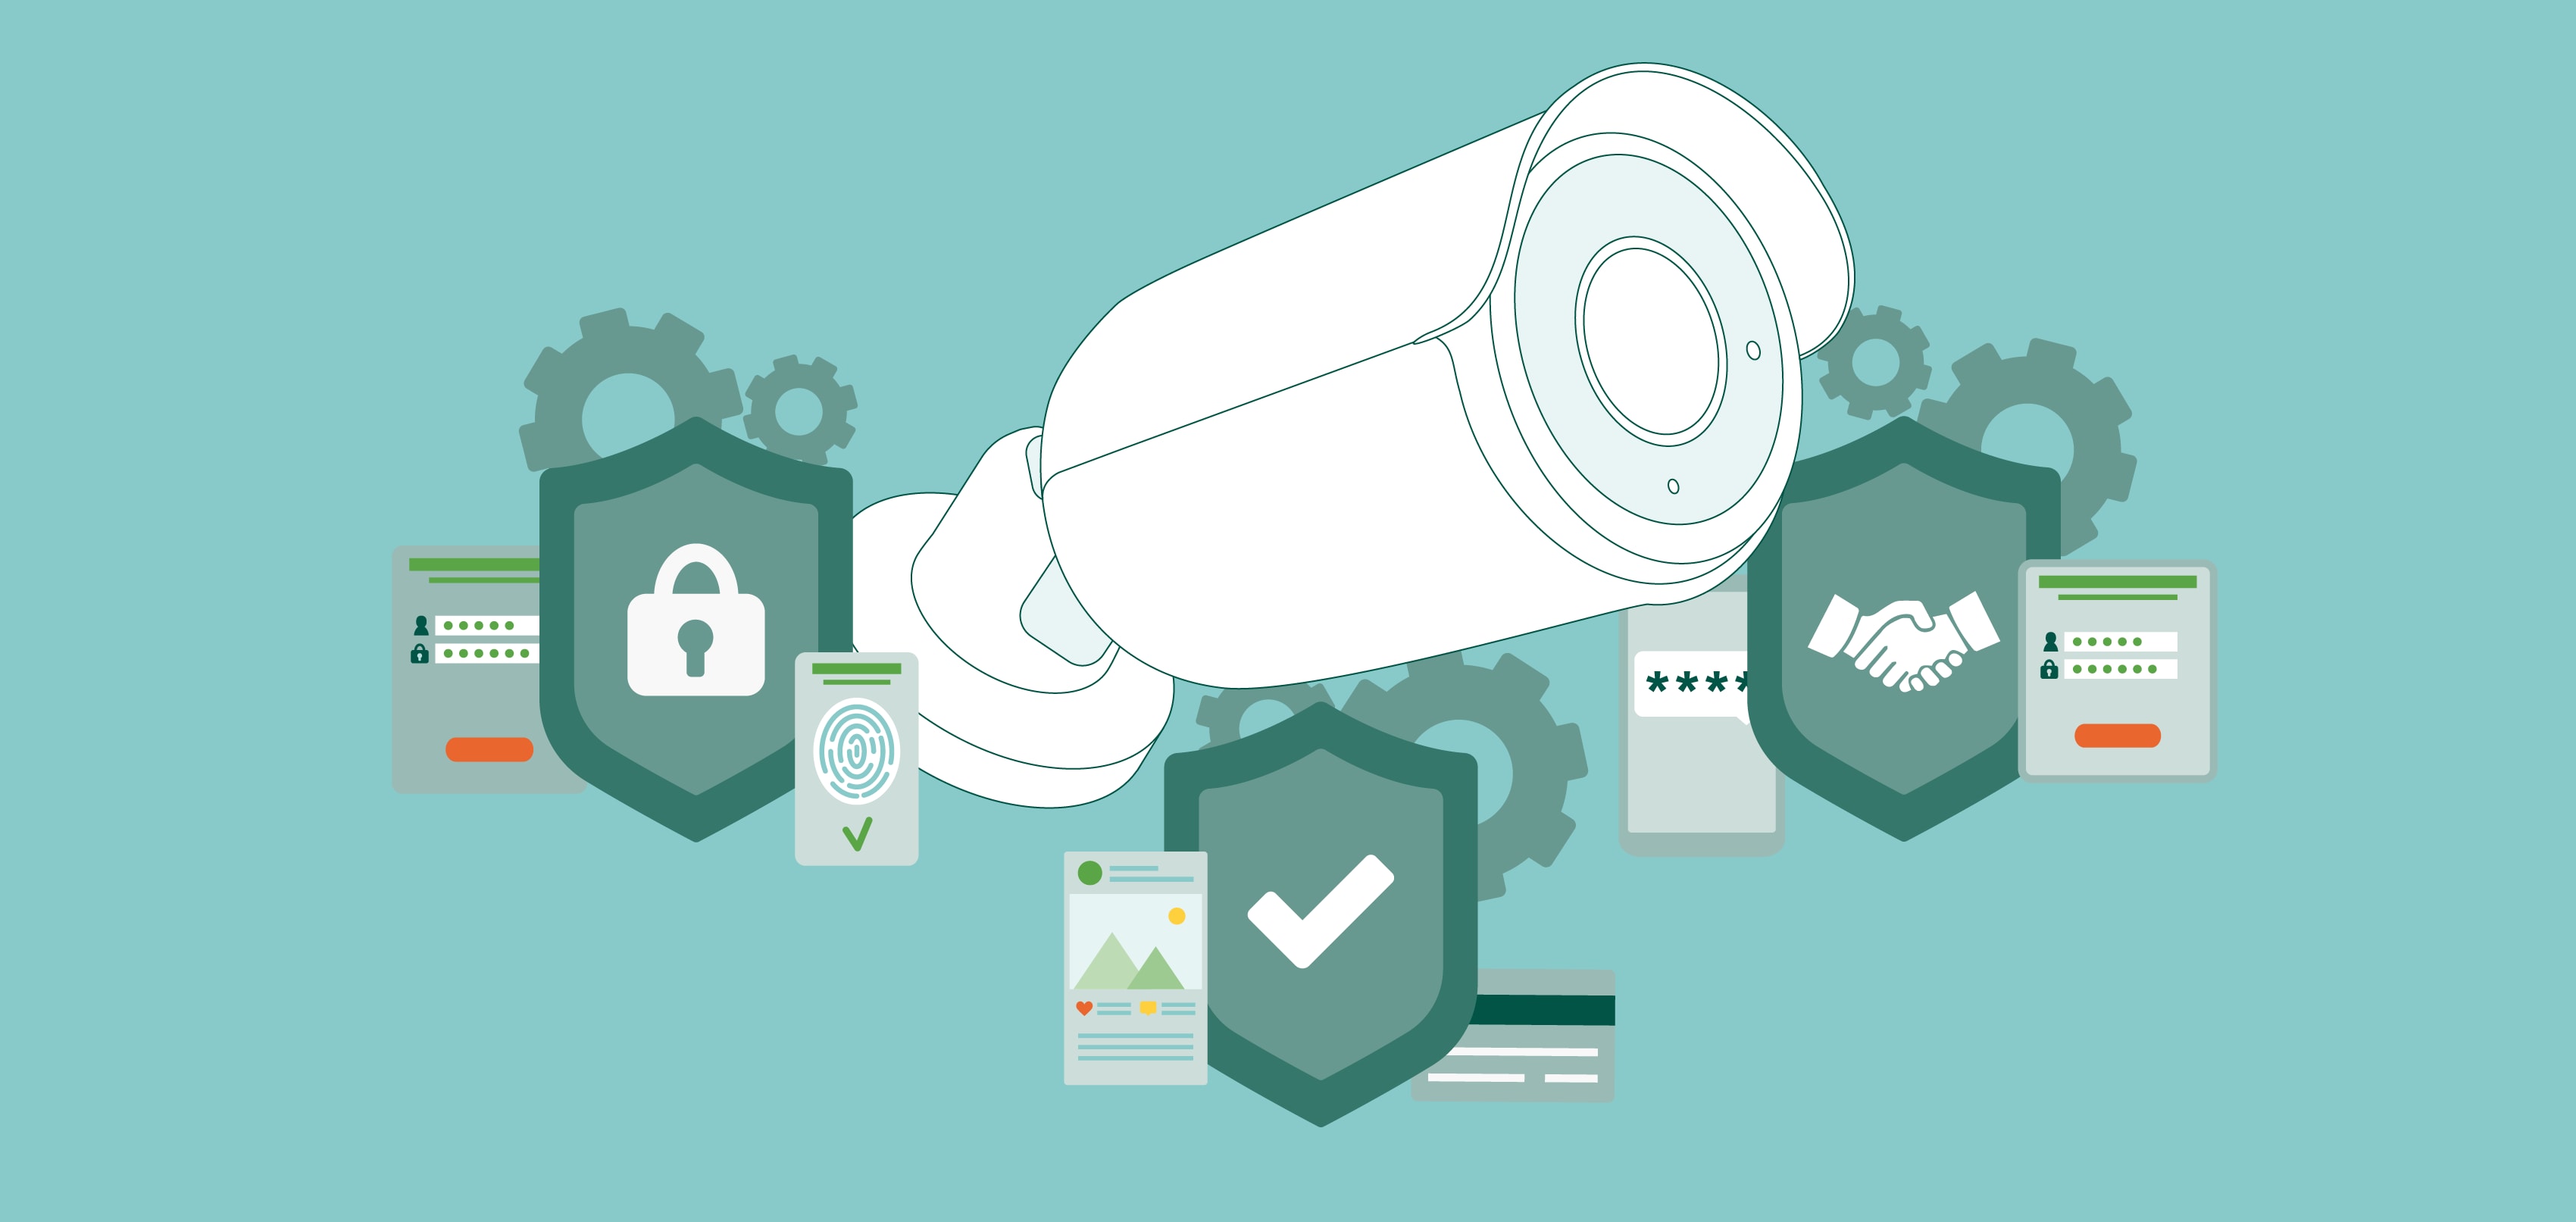 security, privacy, trust, camera illustration concept